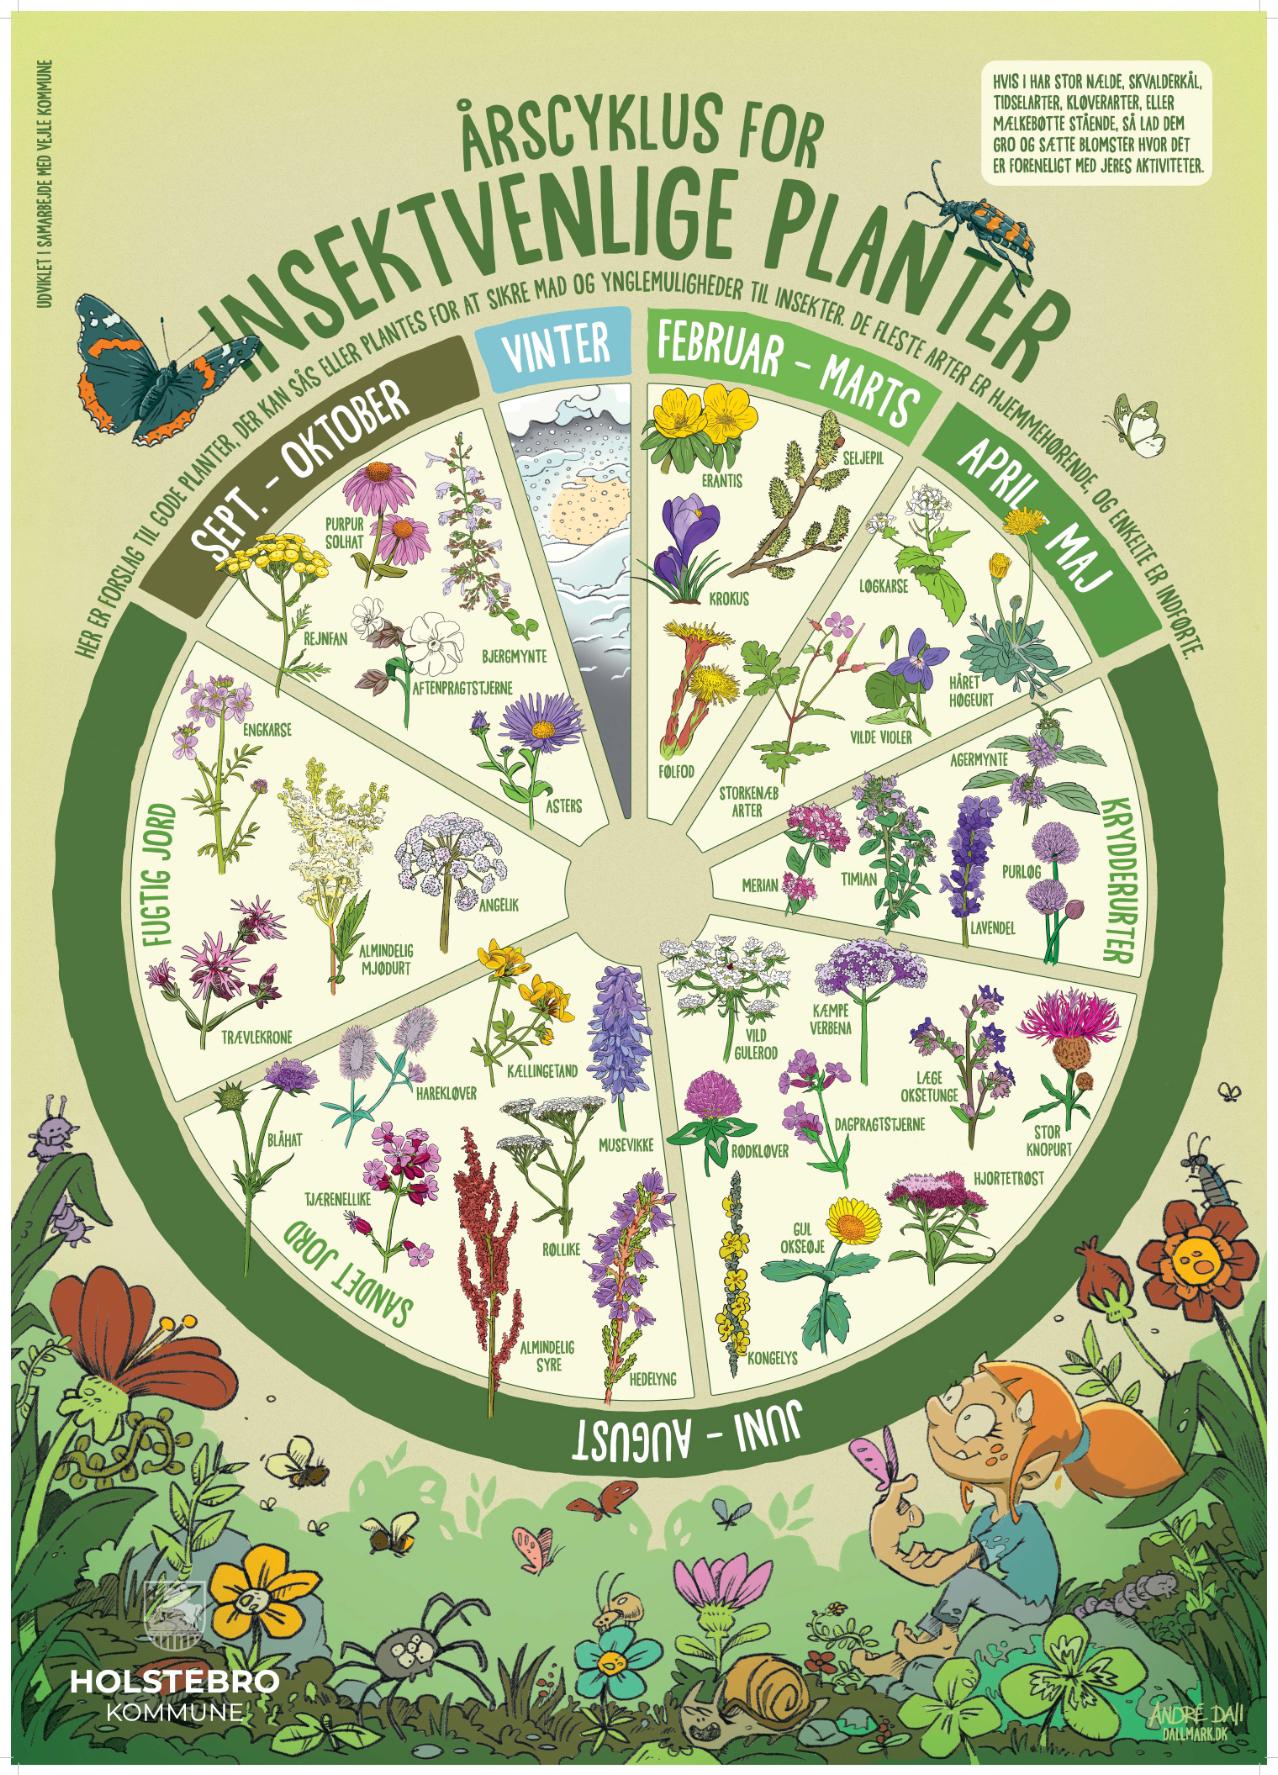 Årscyklus med et udvalg af årstidens insektvenlige planter